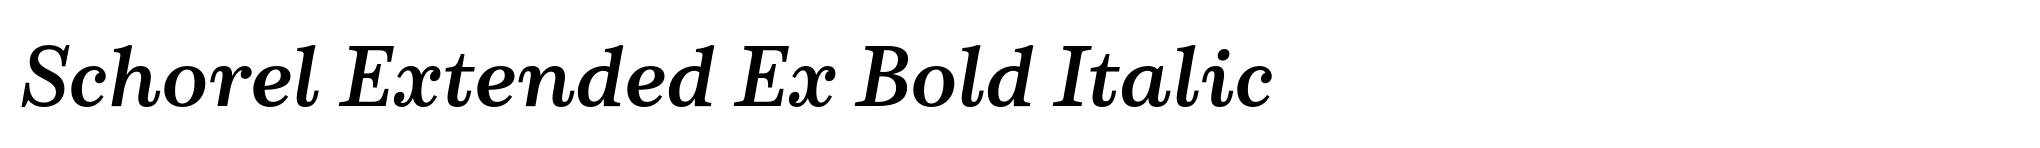 Schorel Extended Ex Bold Italic image